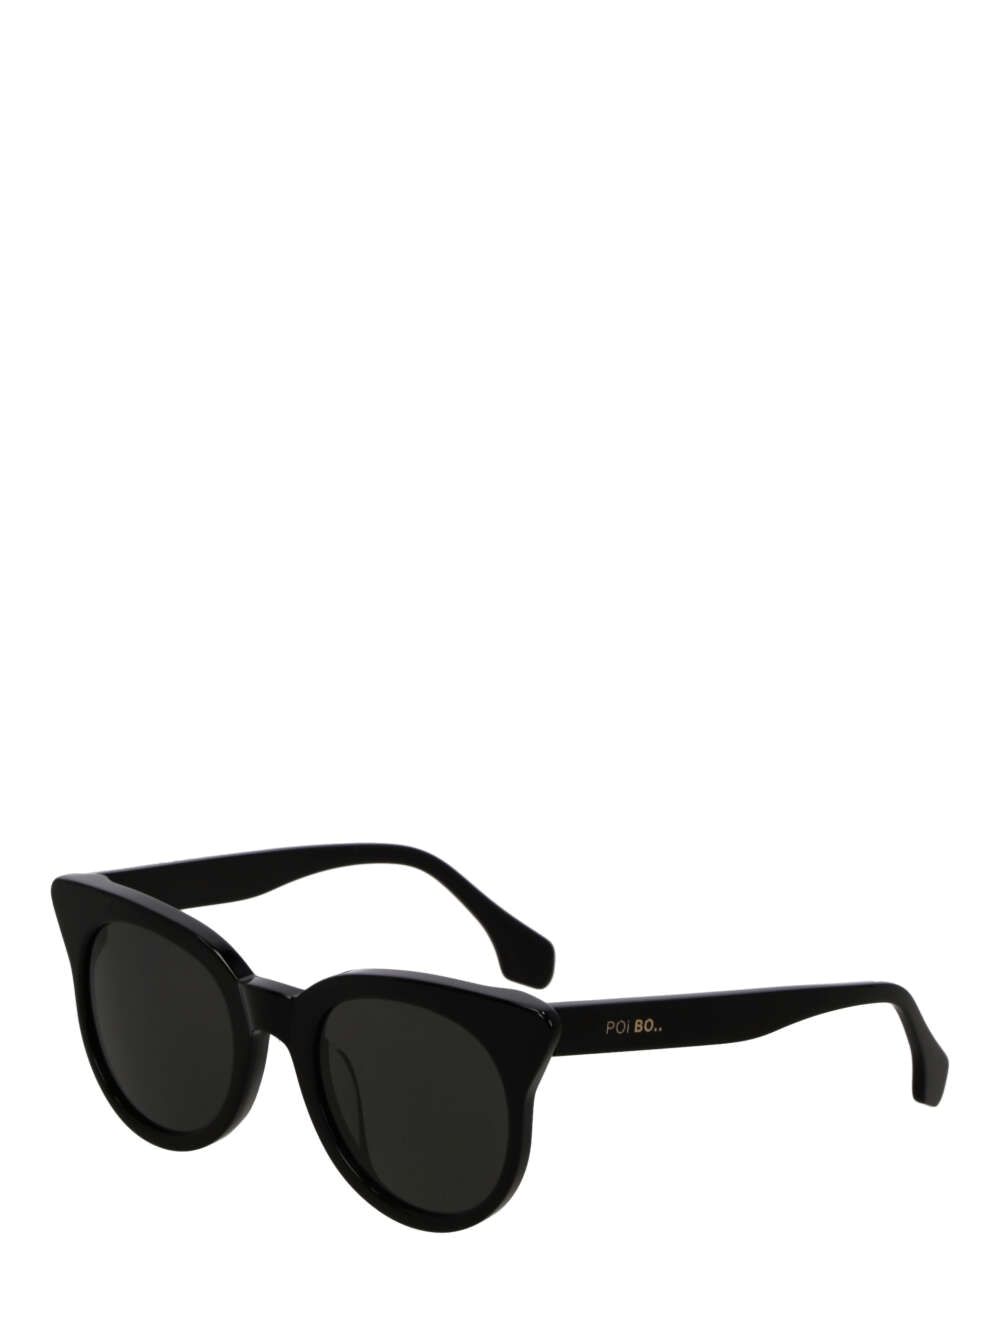 Alino's Black sunglasses